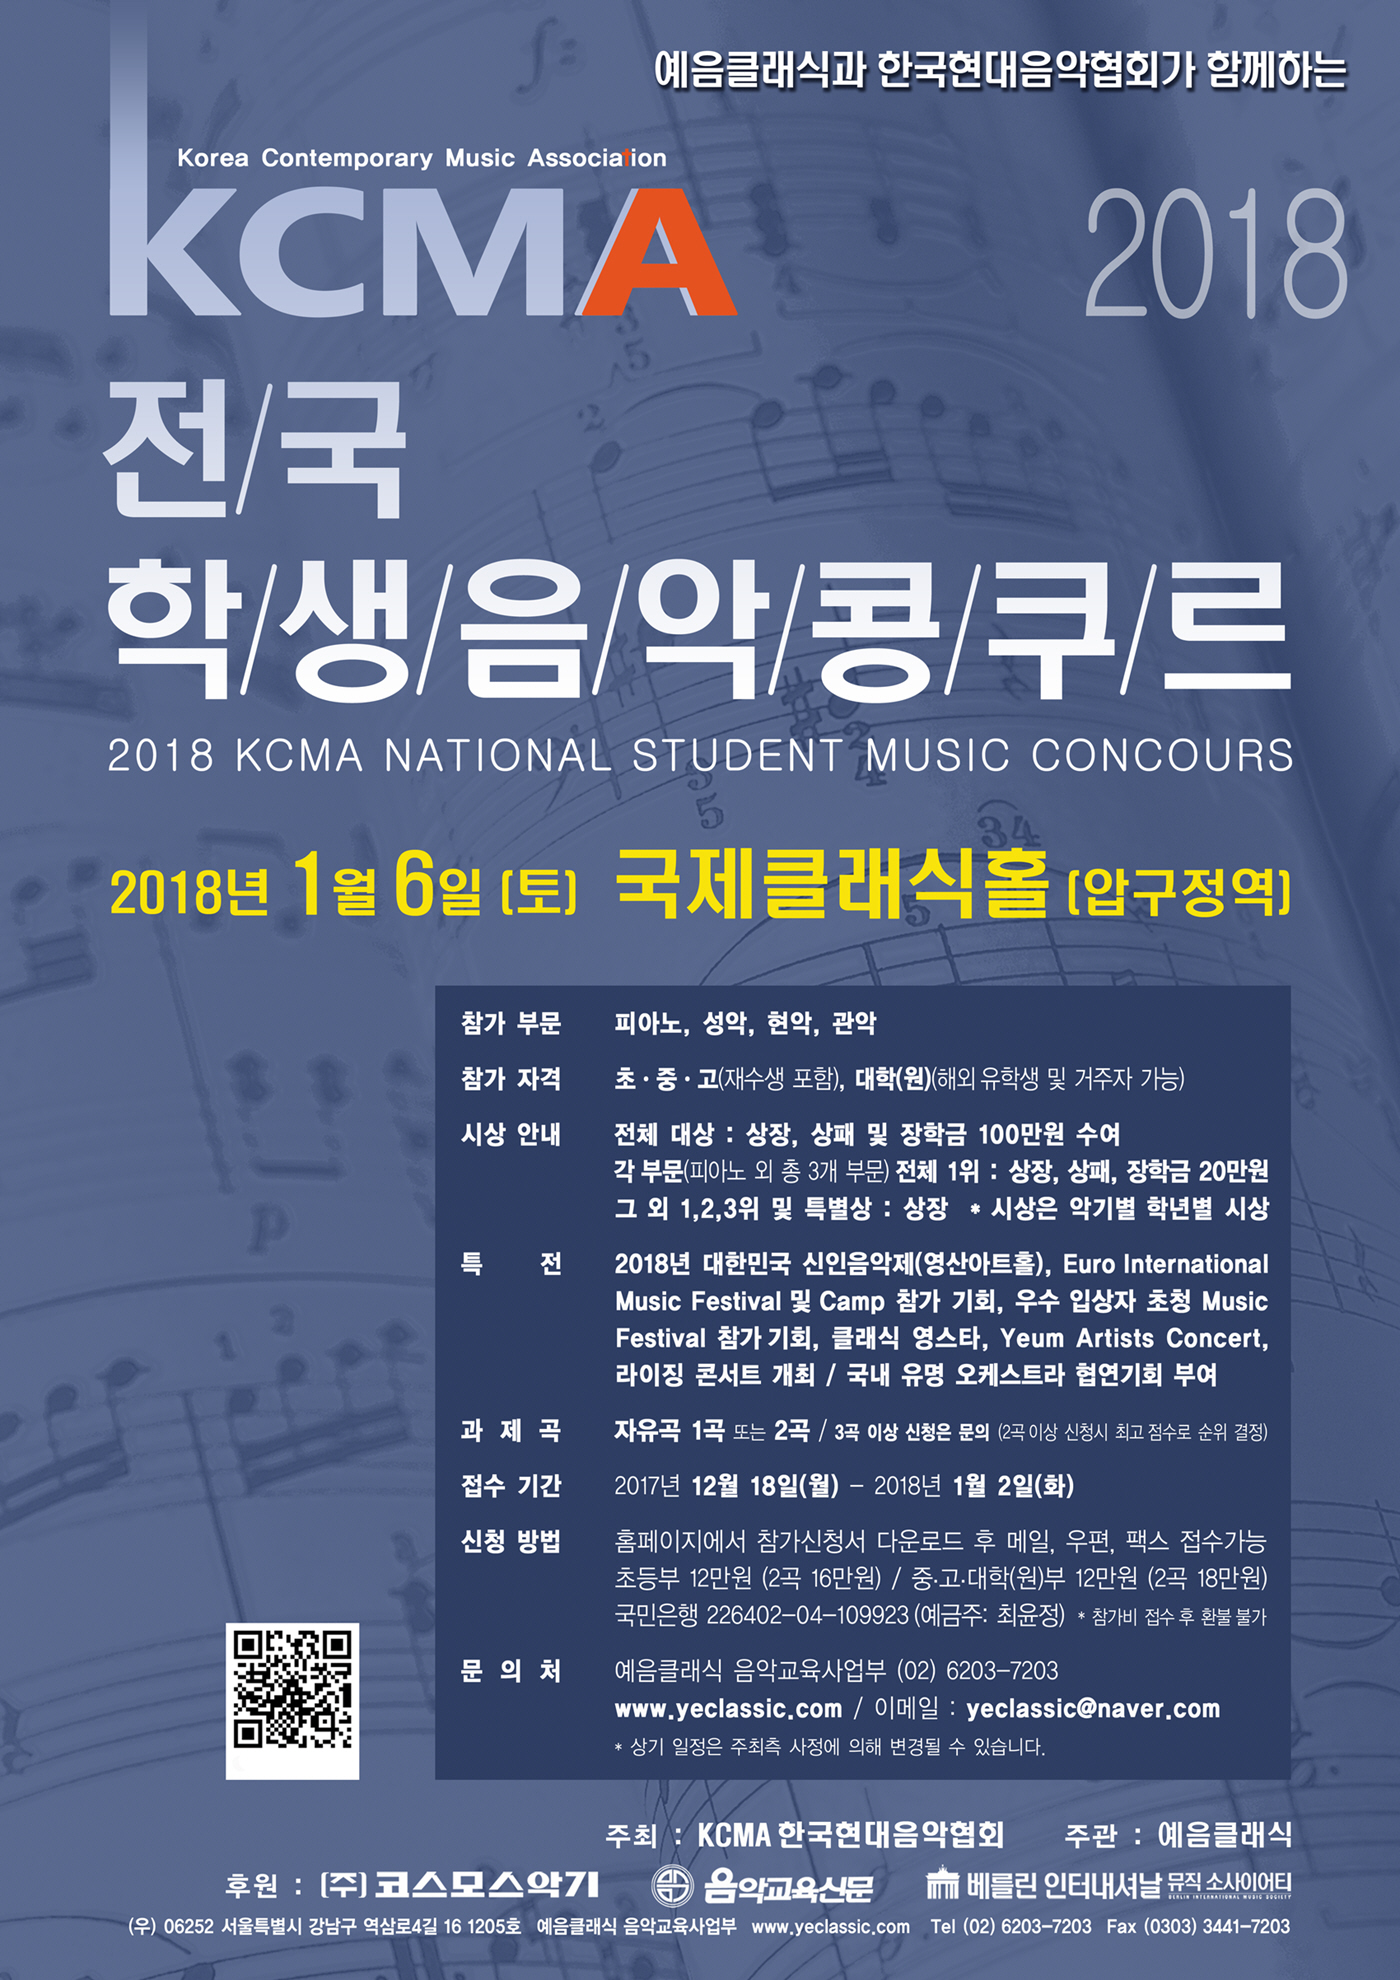 kcma 전국학생음악콩쿠르 web.jpg